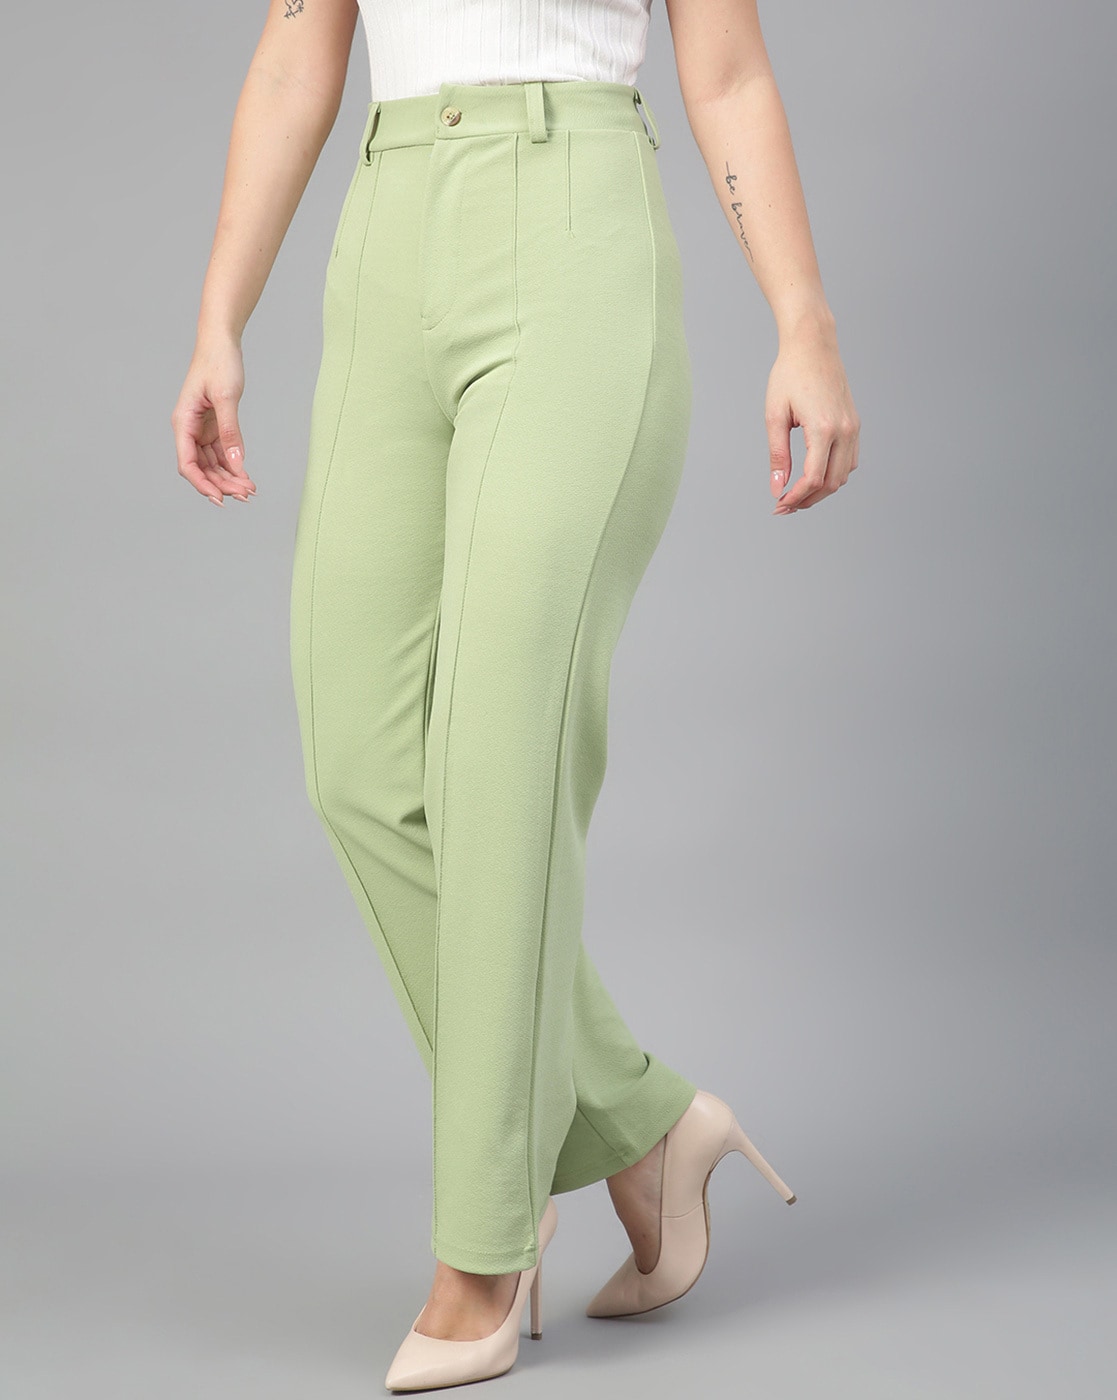 Wide-leg Twill Pants - Light green/white checked - Ladies | H&M US